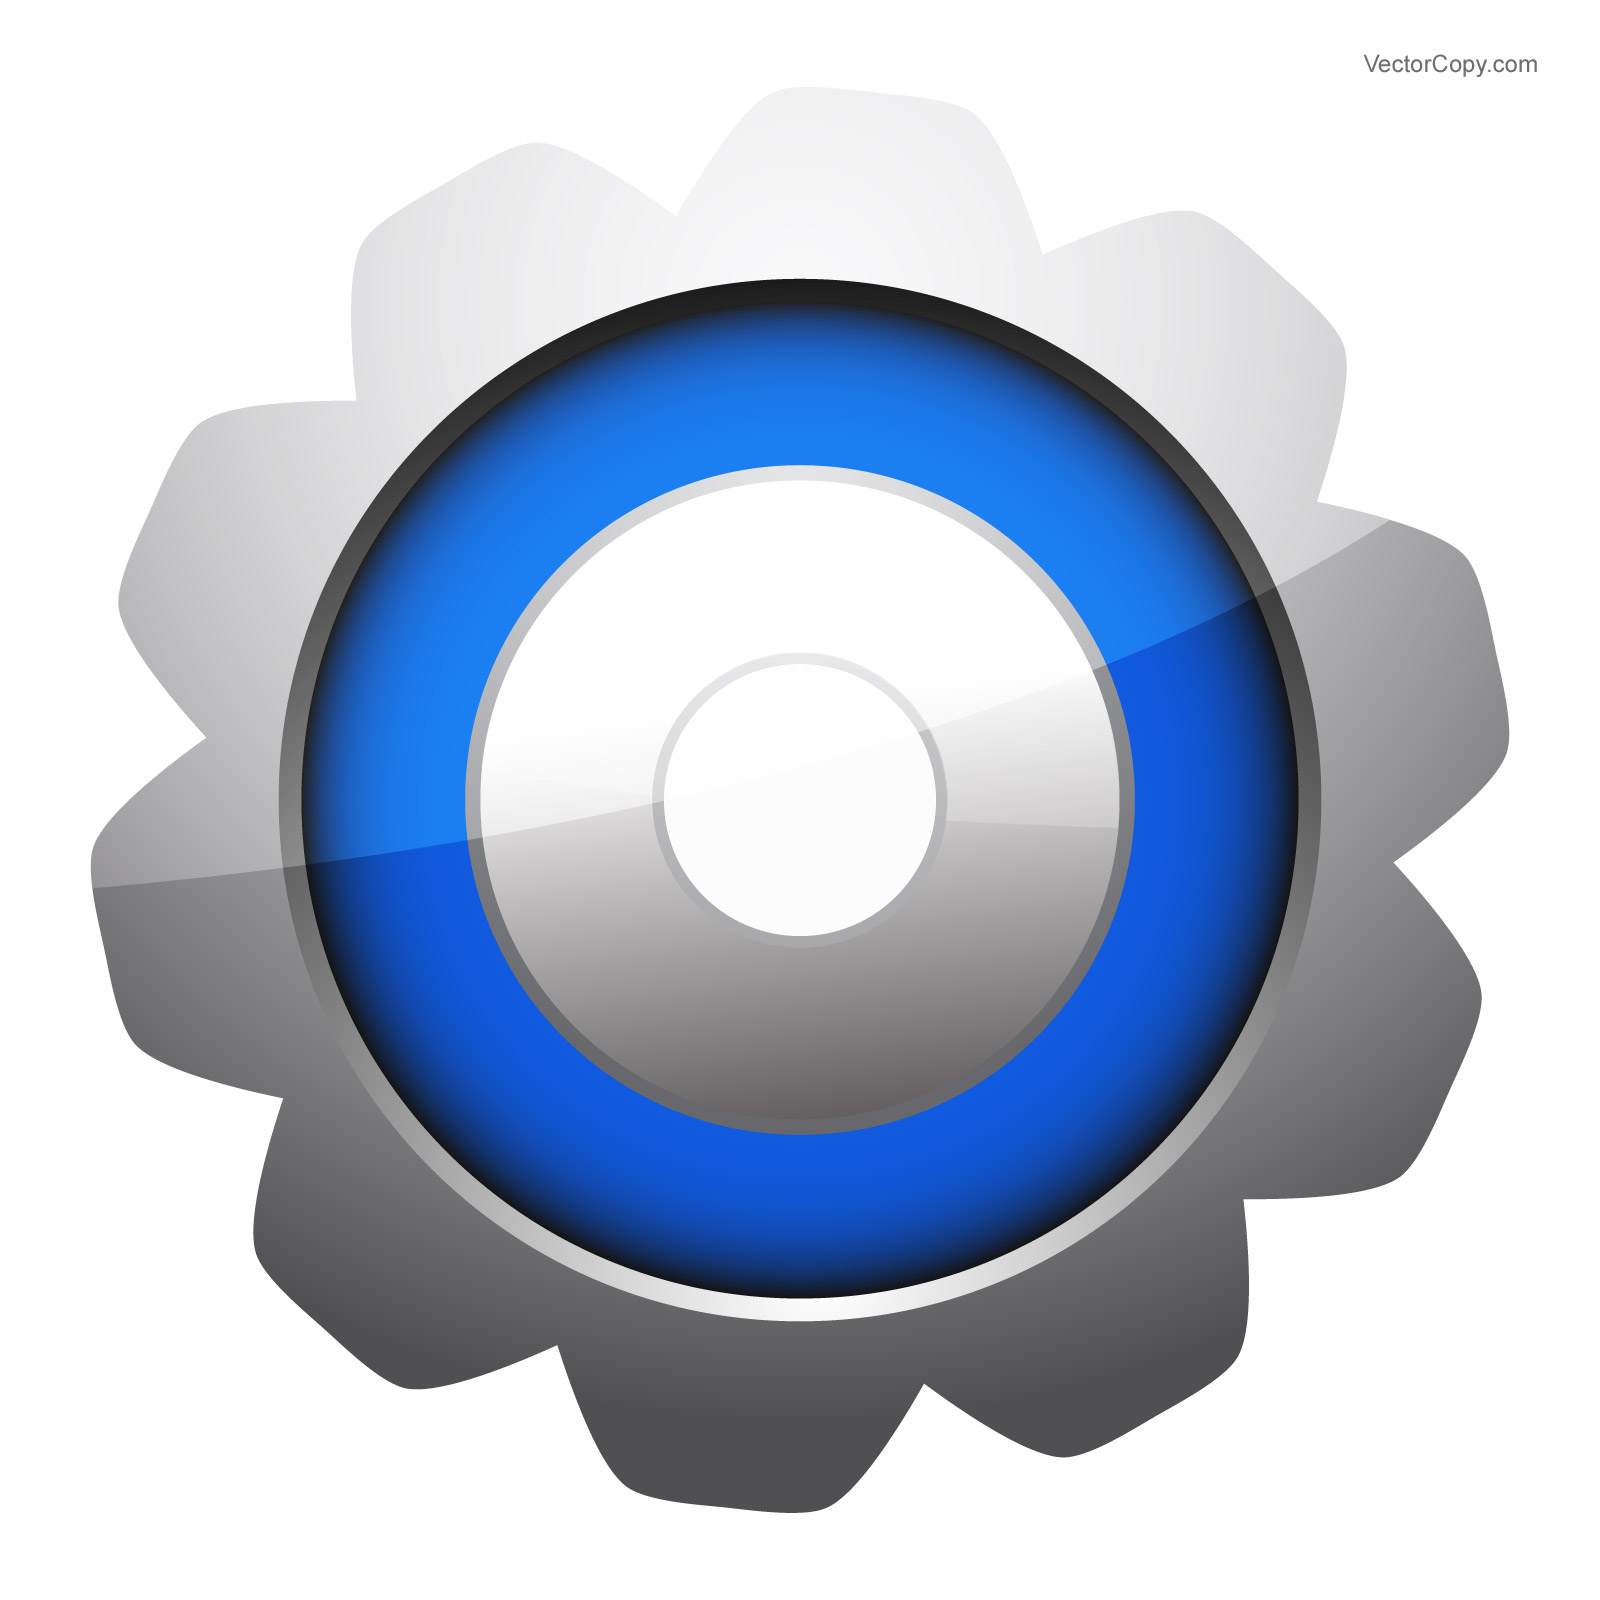 Blue,Circle,Logo,Wheel,Clip art,Icon,Symbol,Illustration,Hardware accessory